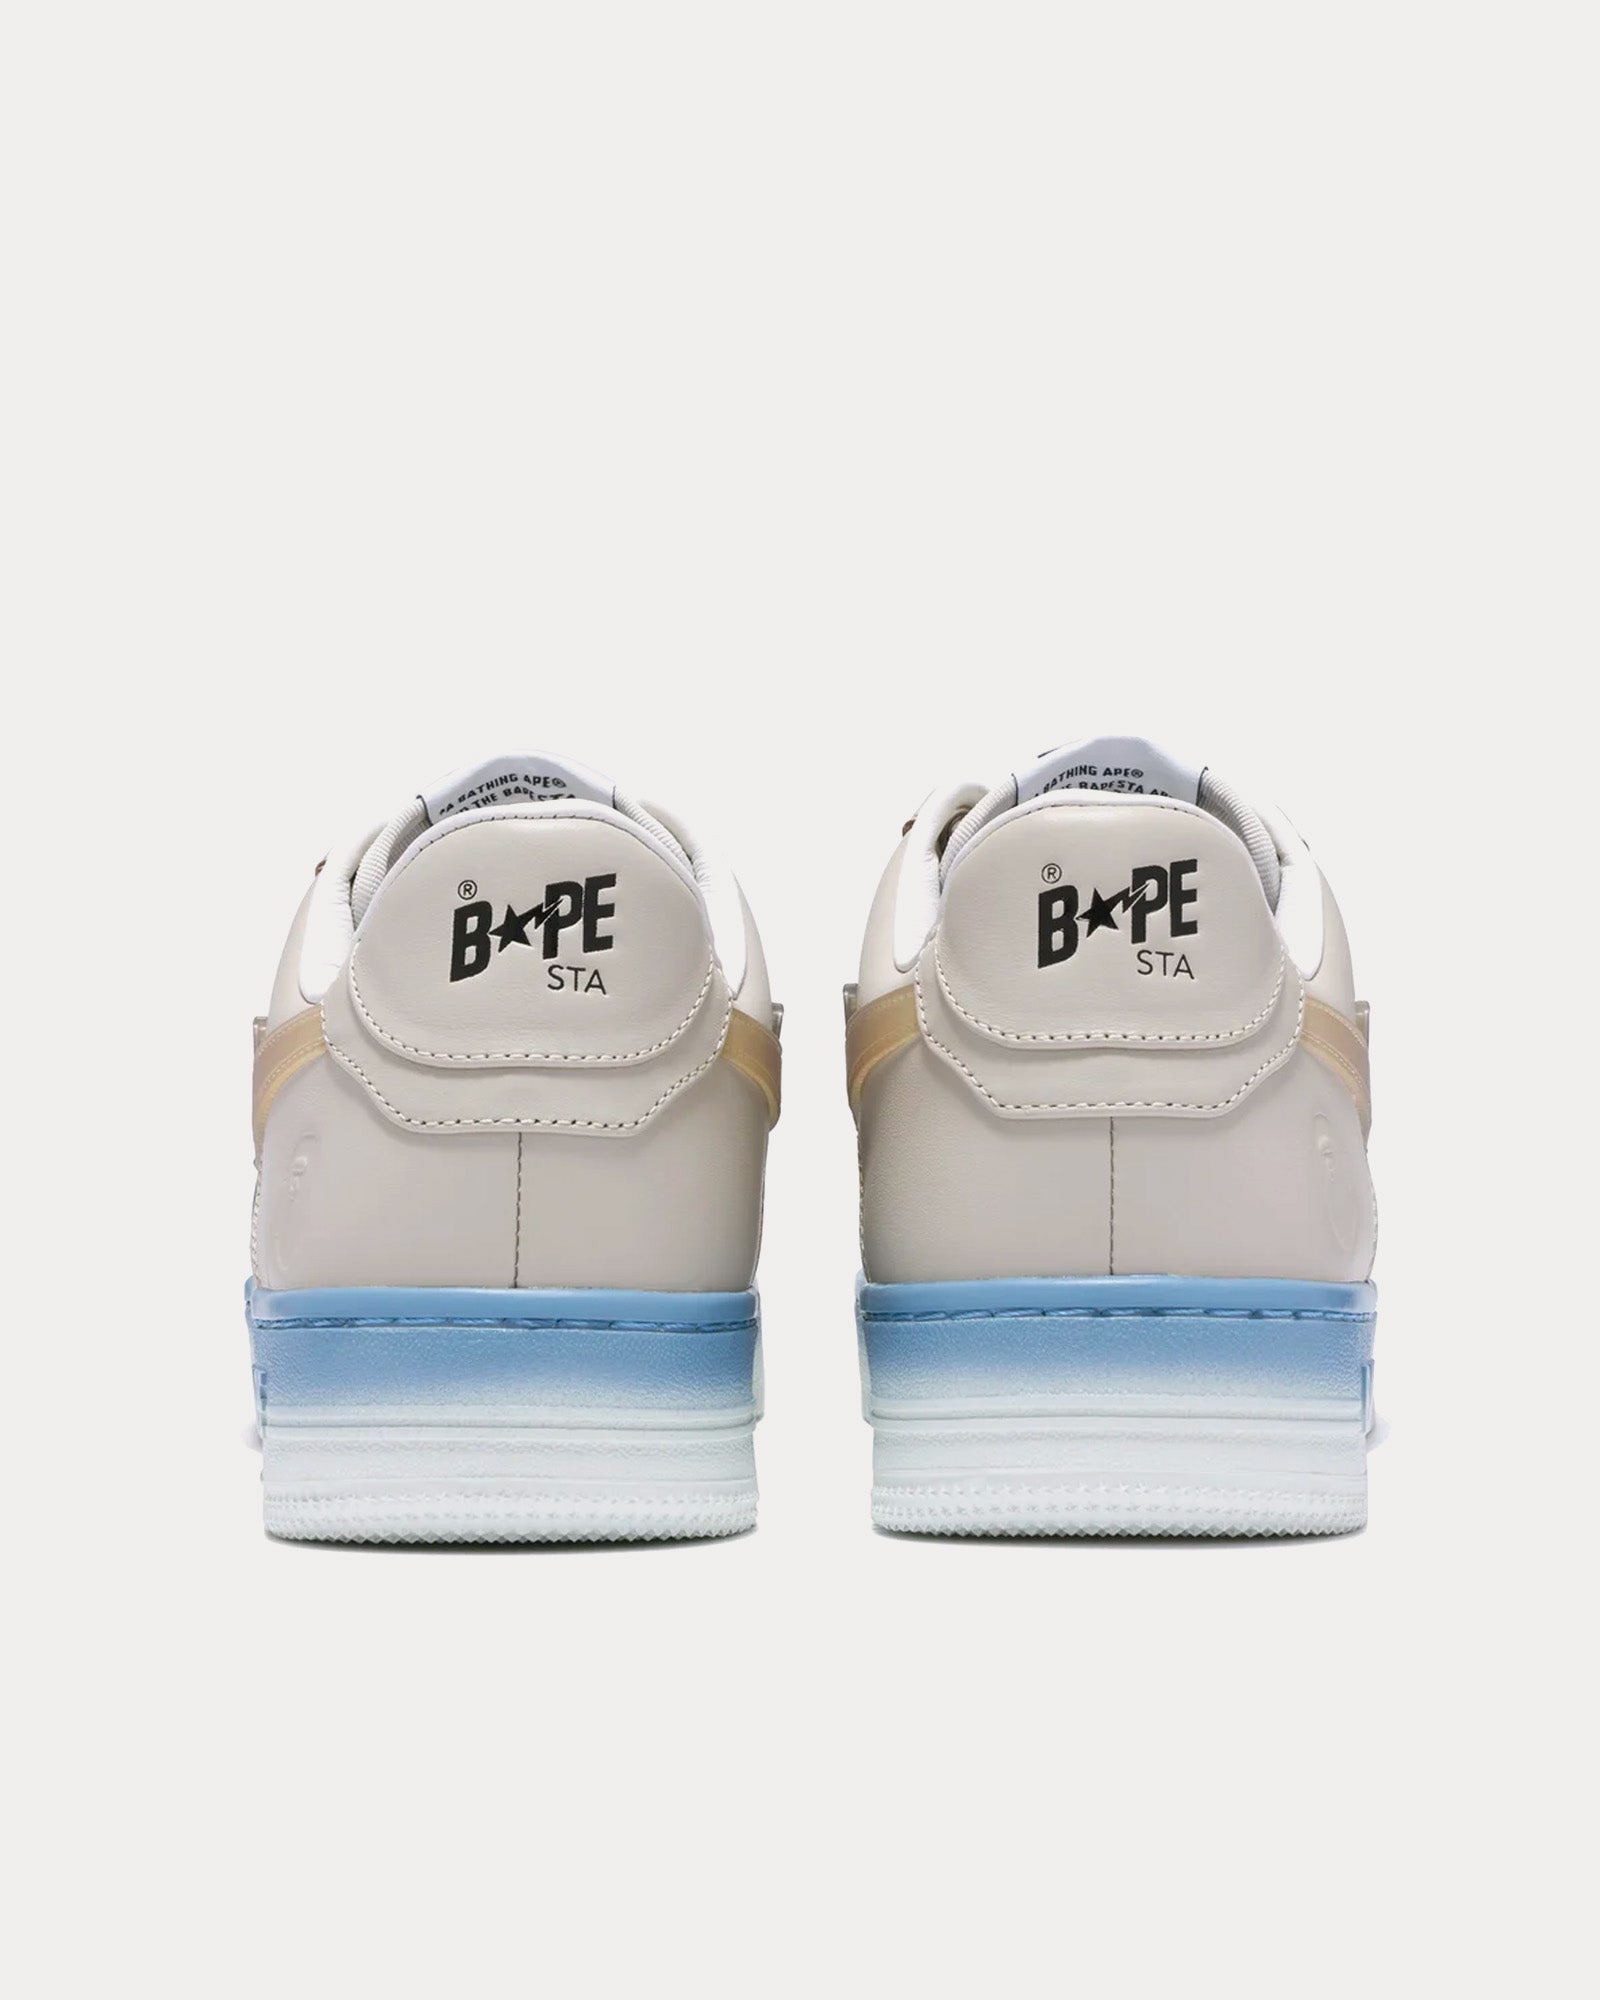 A Bathing APE - Bape Sta #5 Grey / Blue Low Top Sneakers